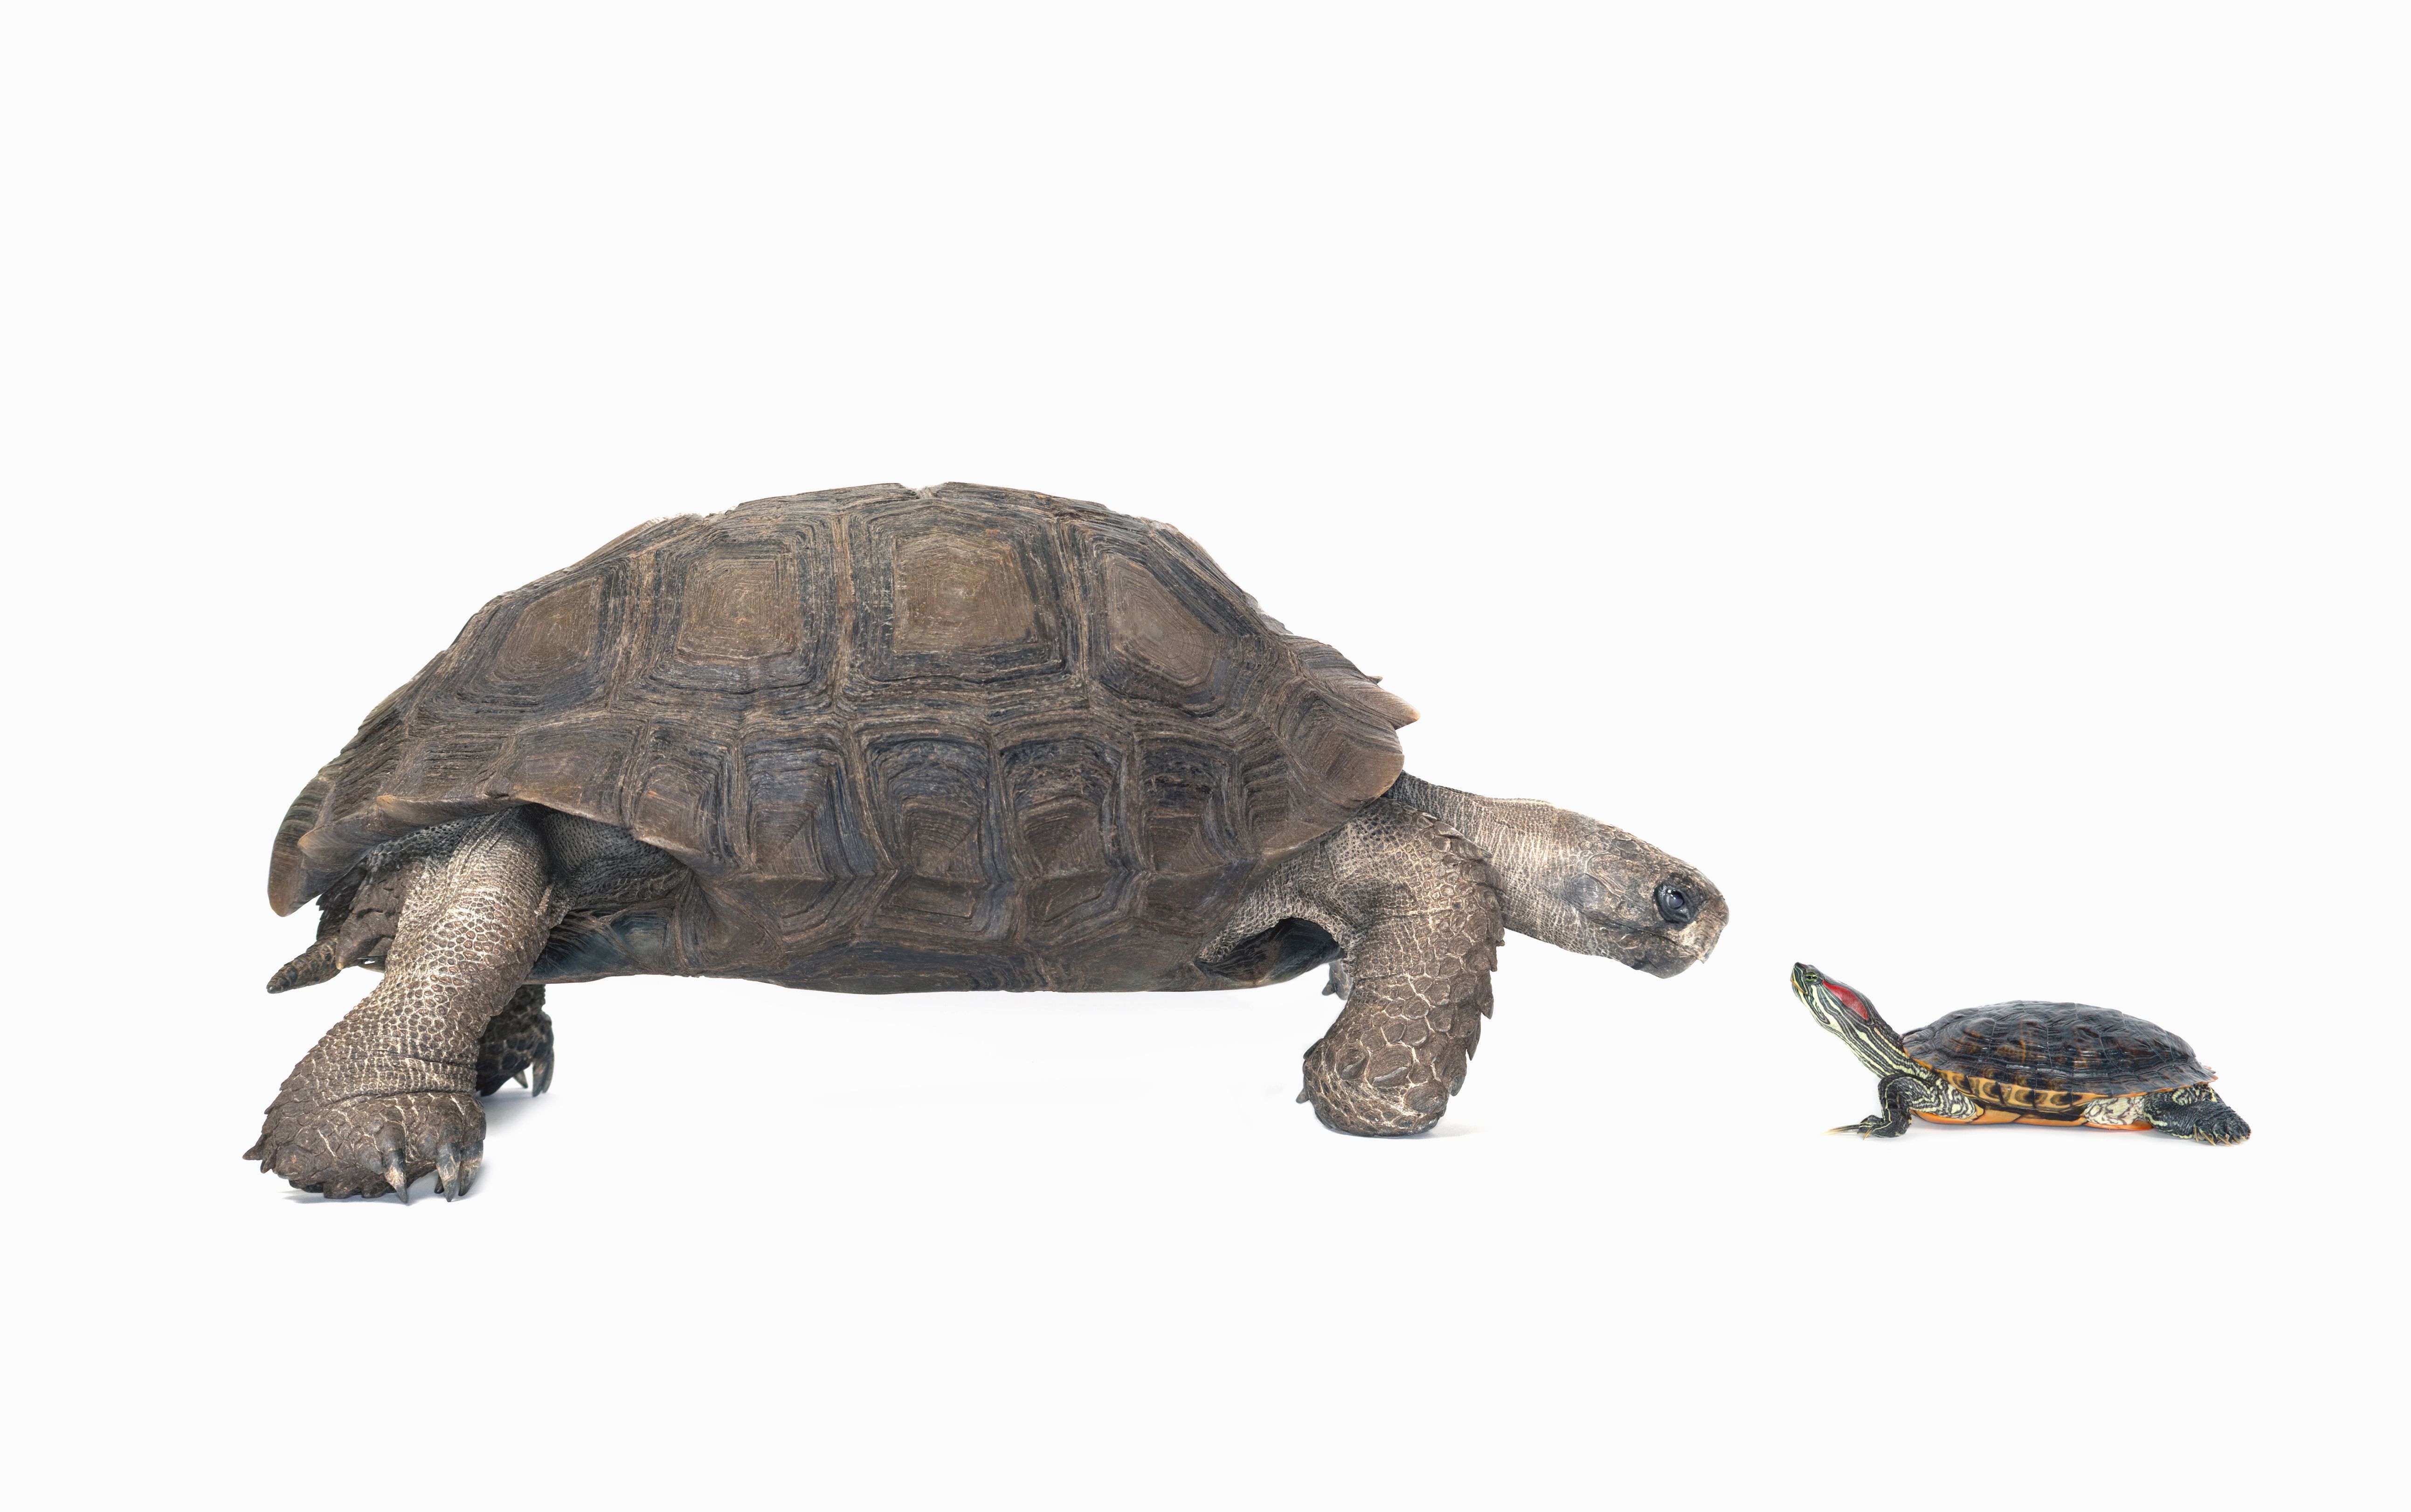 studio shot of a tortoise and turtle